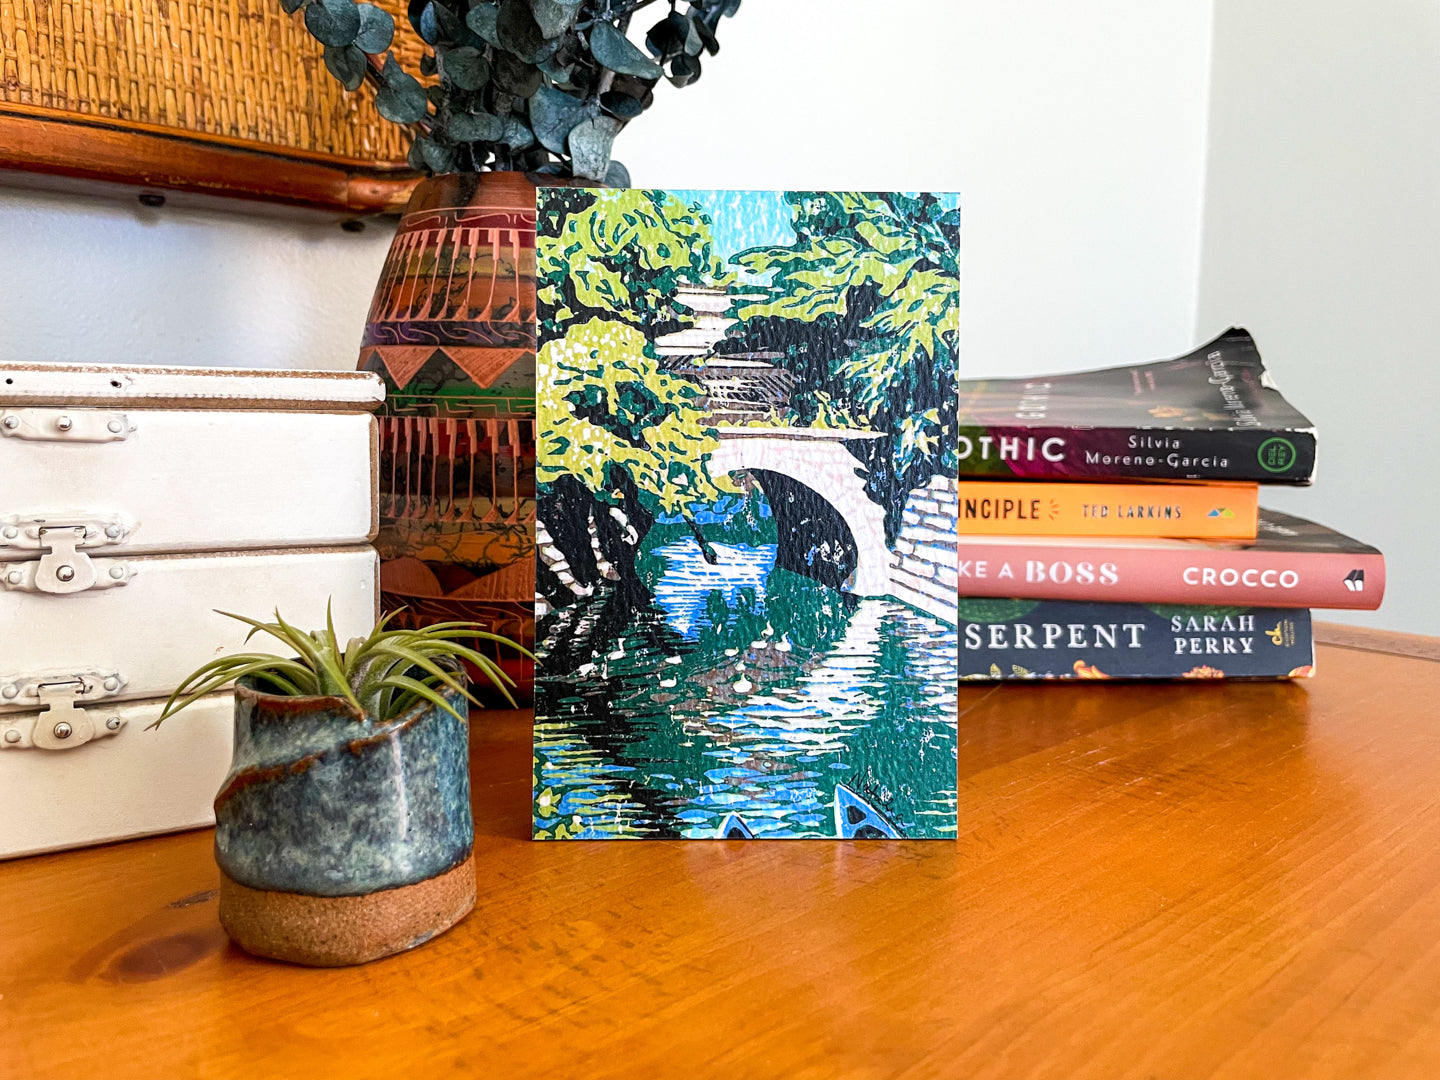 Michigan landscapes art by Natalia Wohletz of Peninsula Prints titled Huron River Bridge.